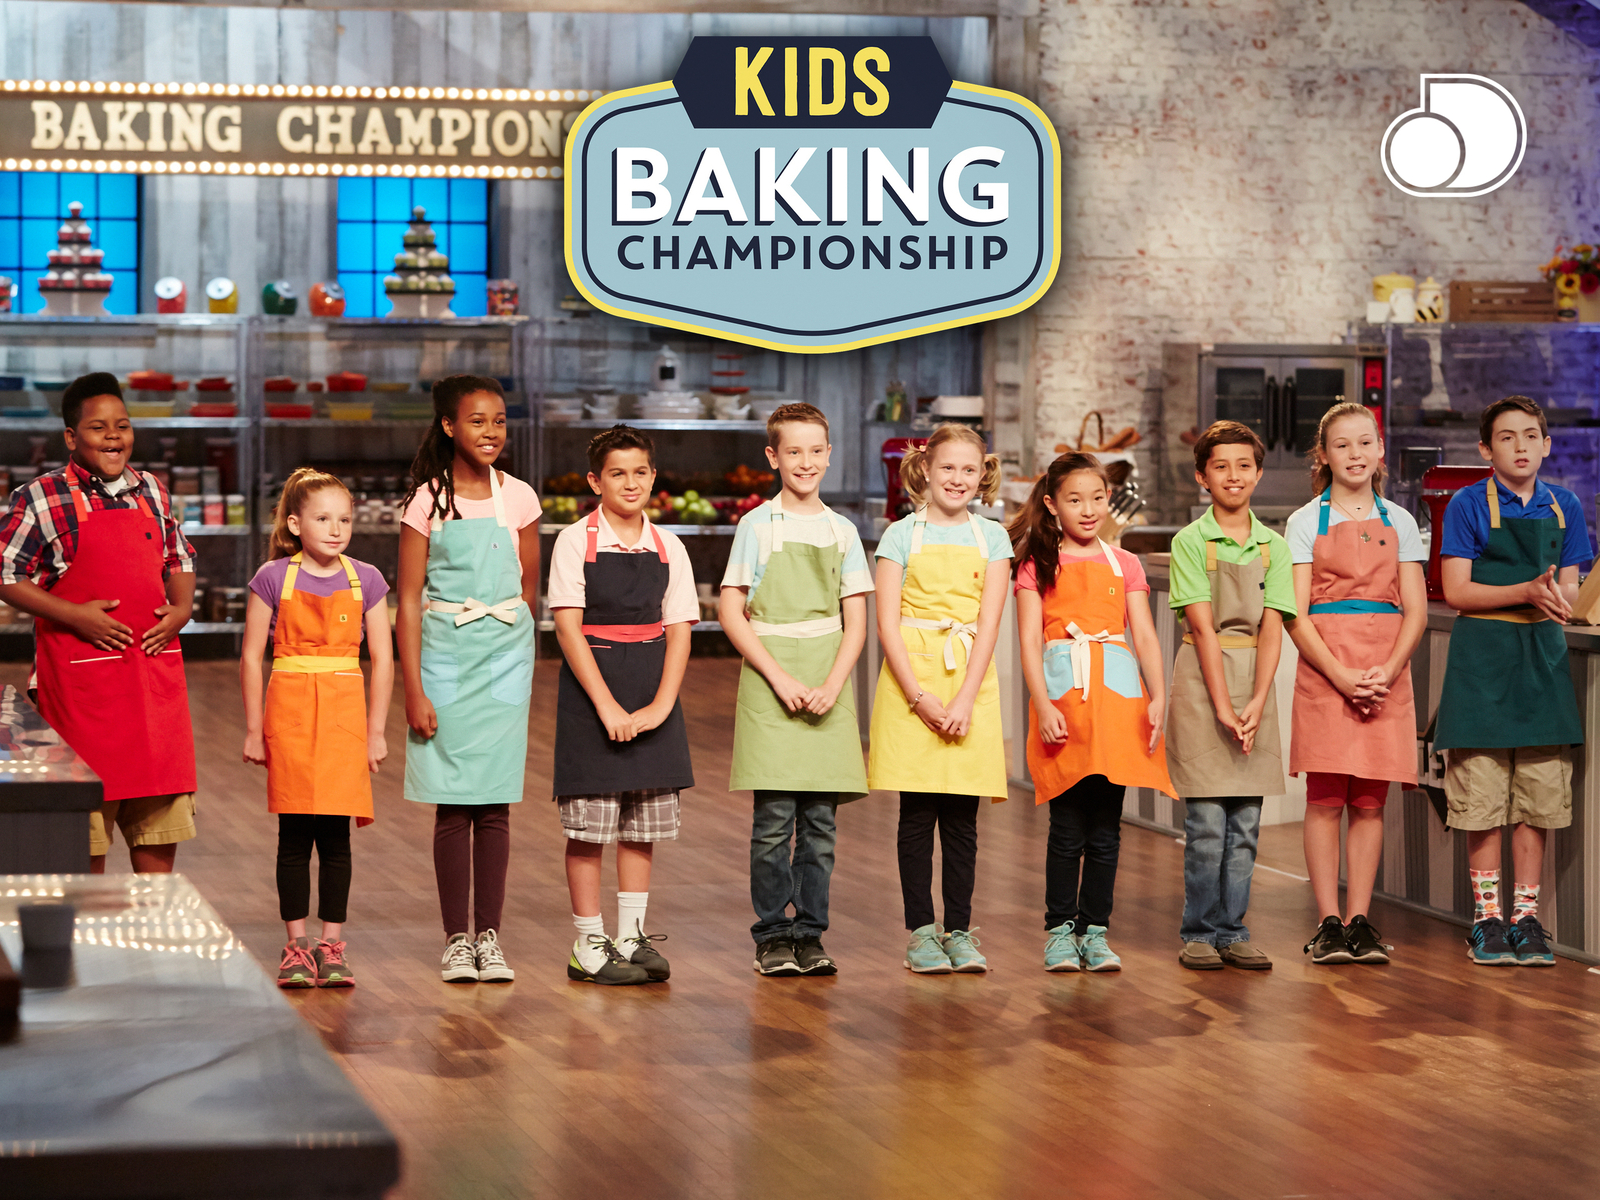 Where Can You Watch “Kids Baking Championship?”